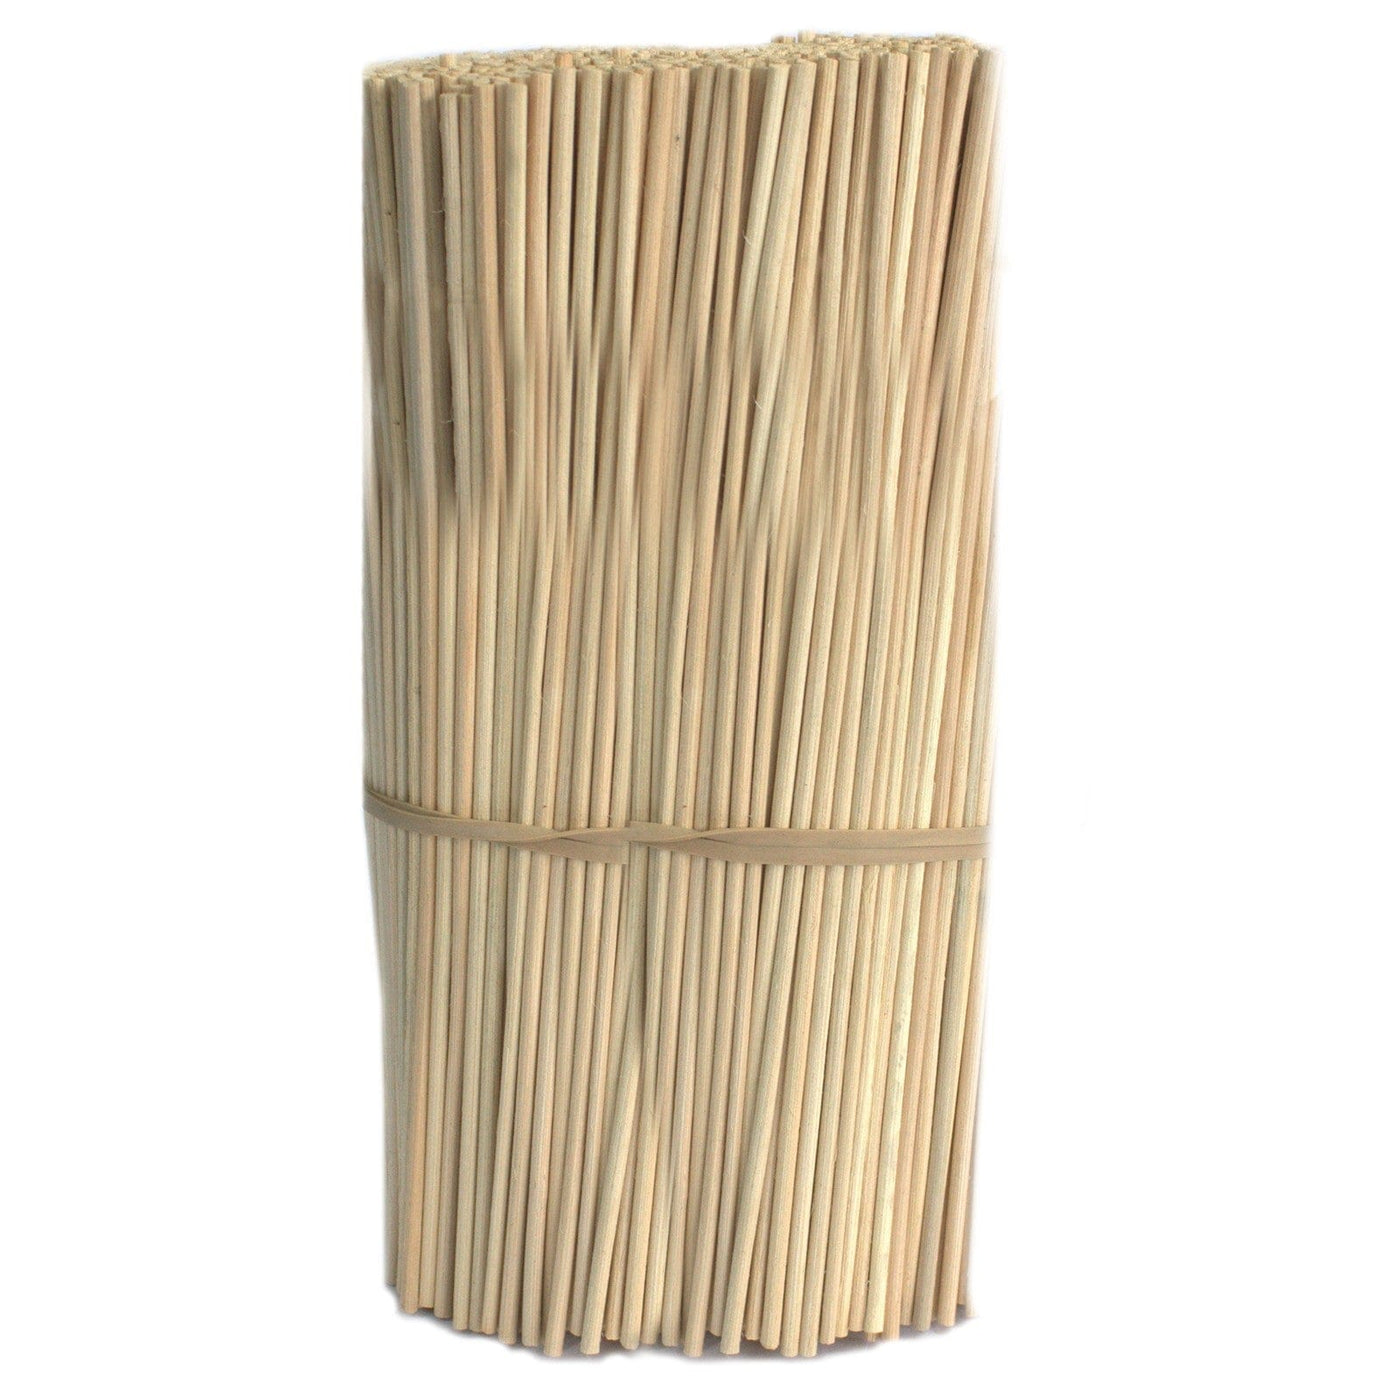 Natural Reed Diffuser Sticks -25cm x 3mm